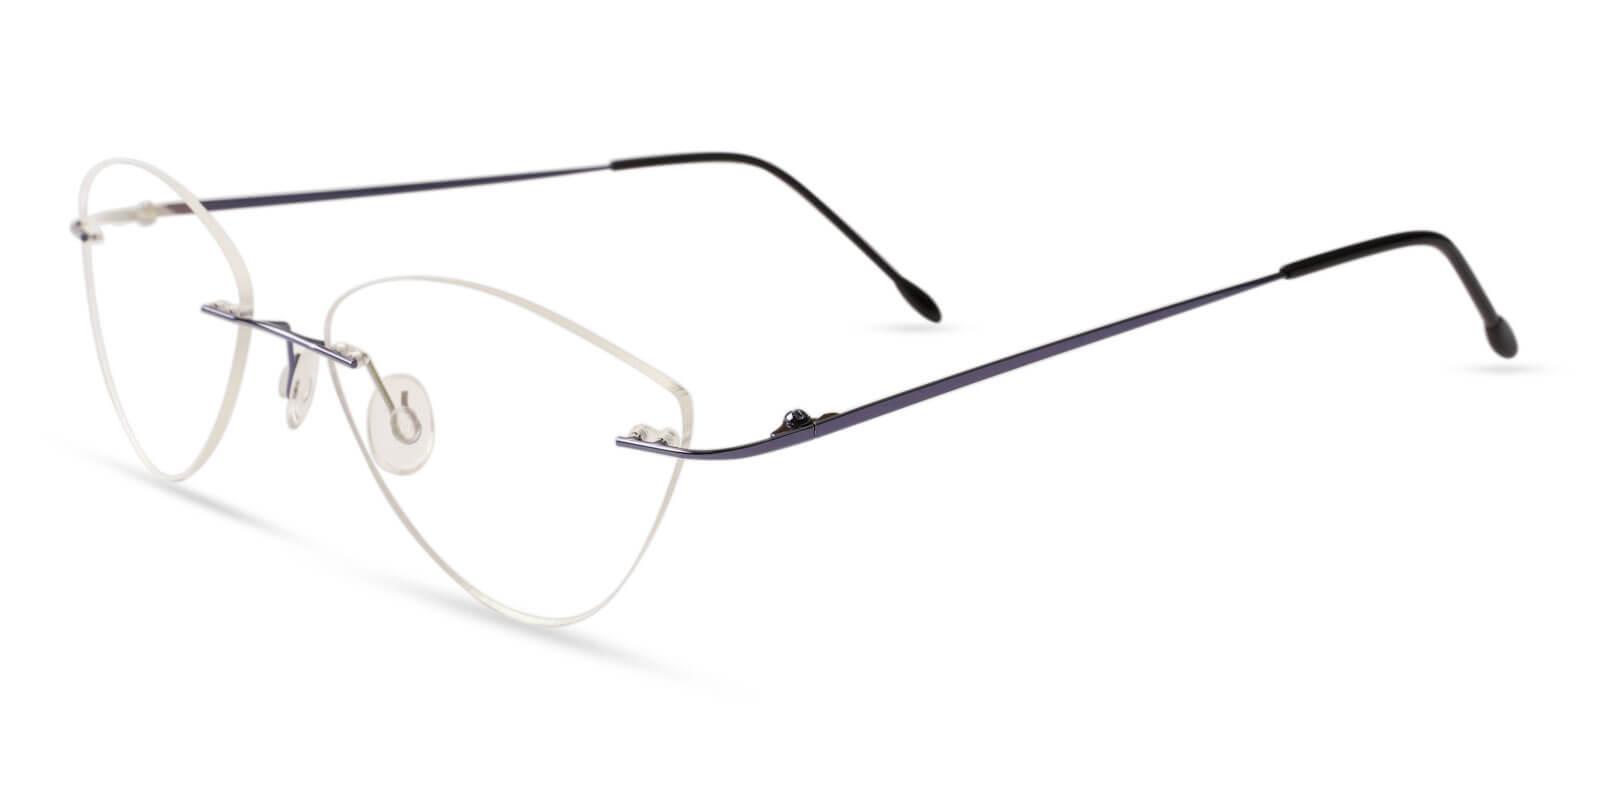 Huguenot Blue Metal Eyeglasses , NosePads Frames from ABBE Glasses